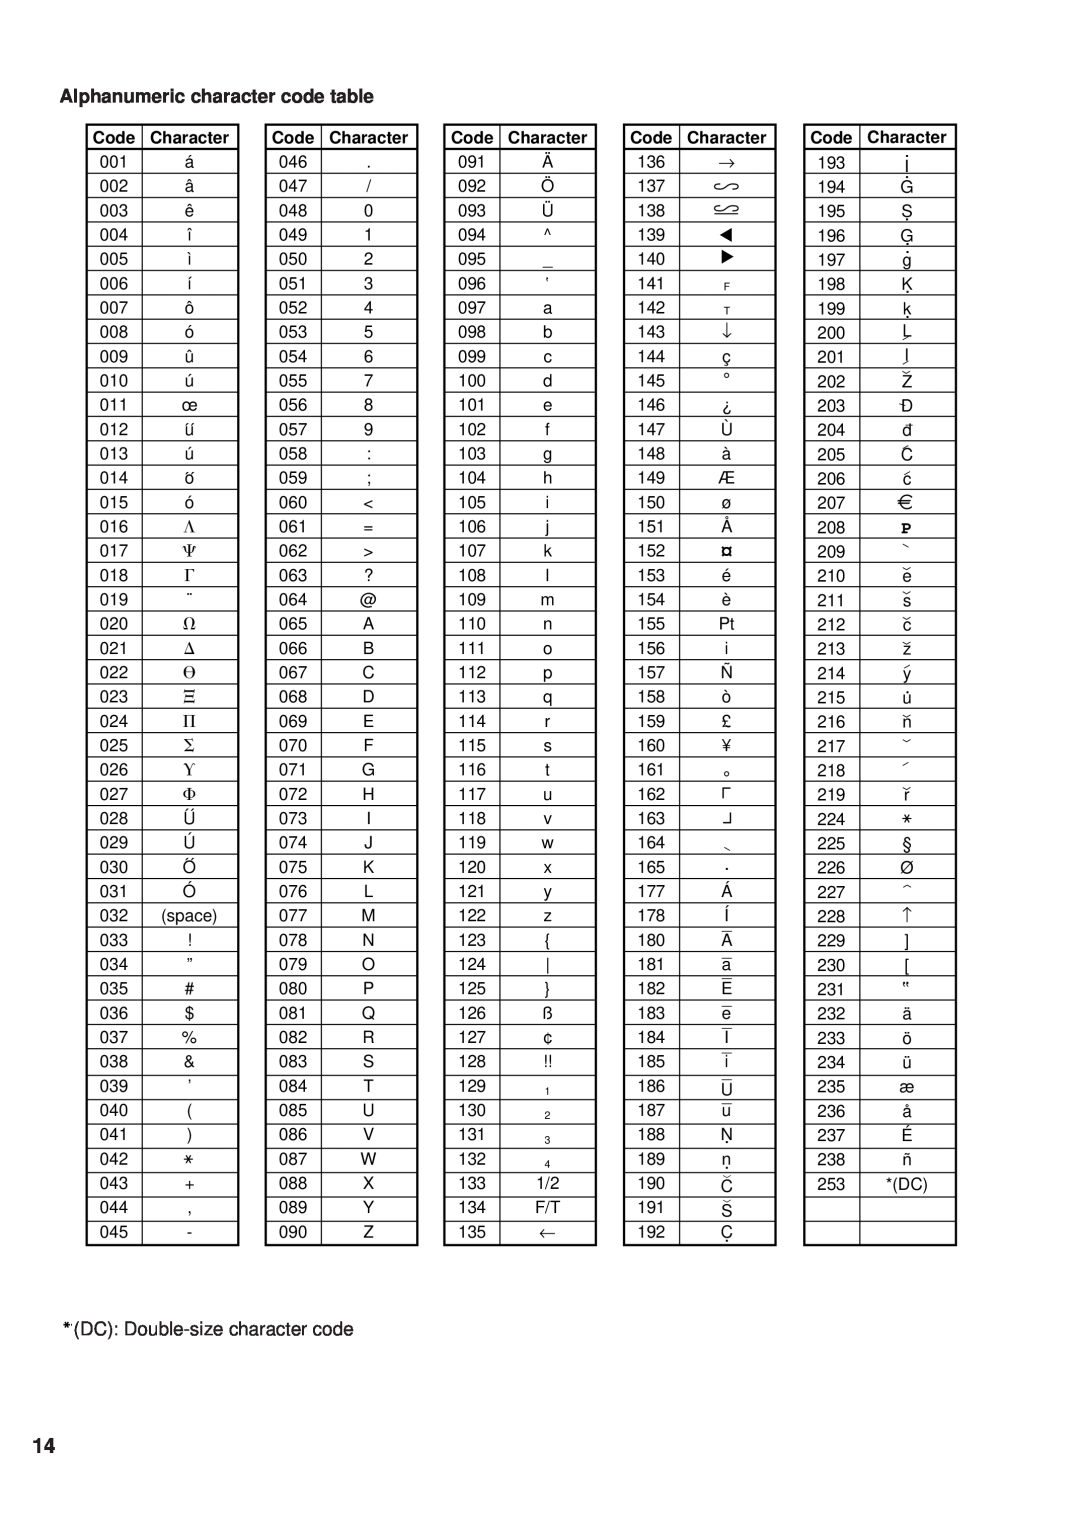 Sharp ER-A450 instruction manual 231 ”, Alphanumeric character code table, 152 ¤, Code Character 